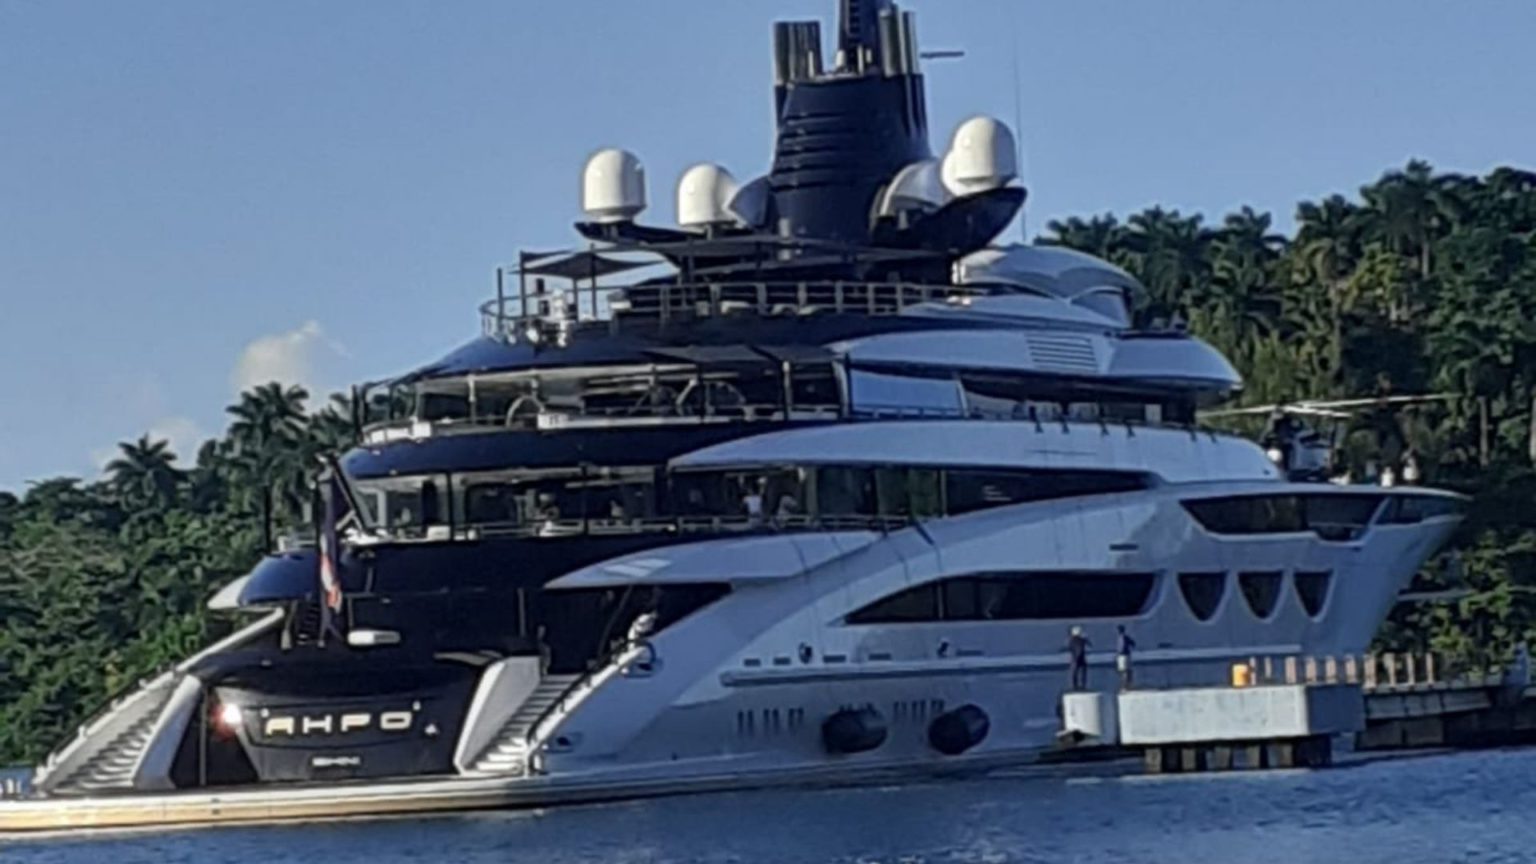 who owns the billion dollar yacht